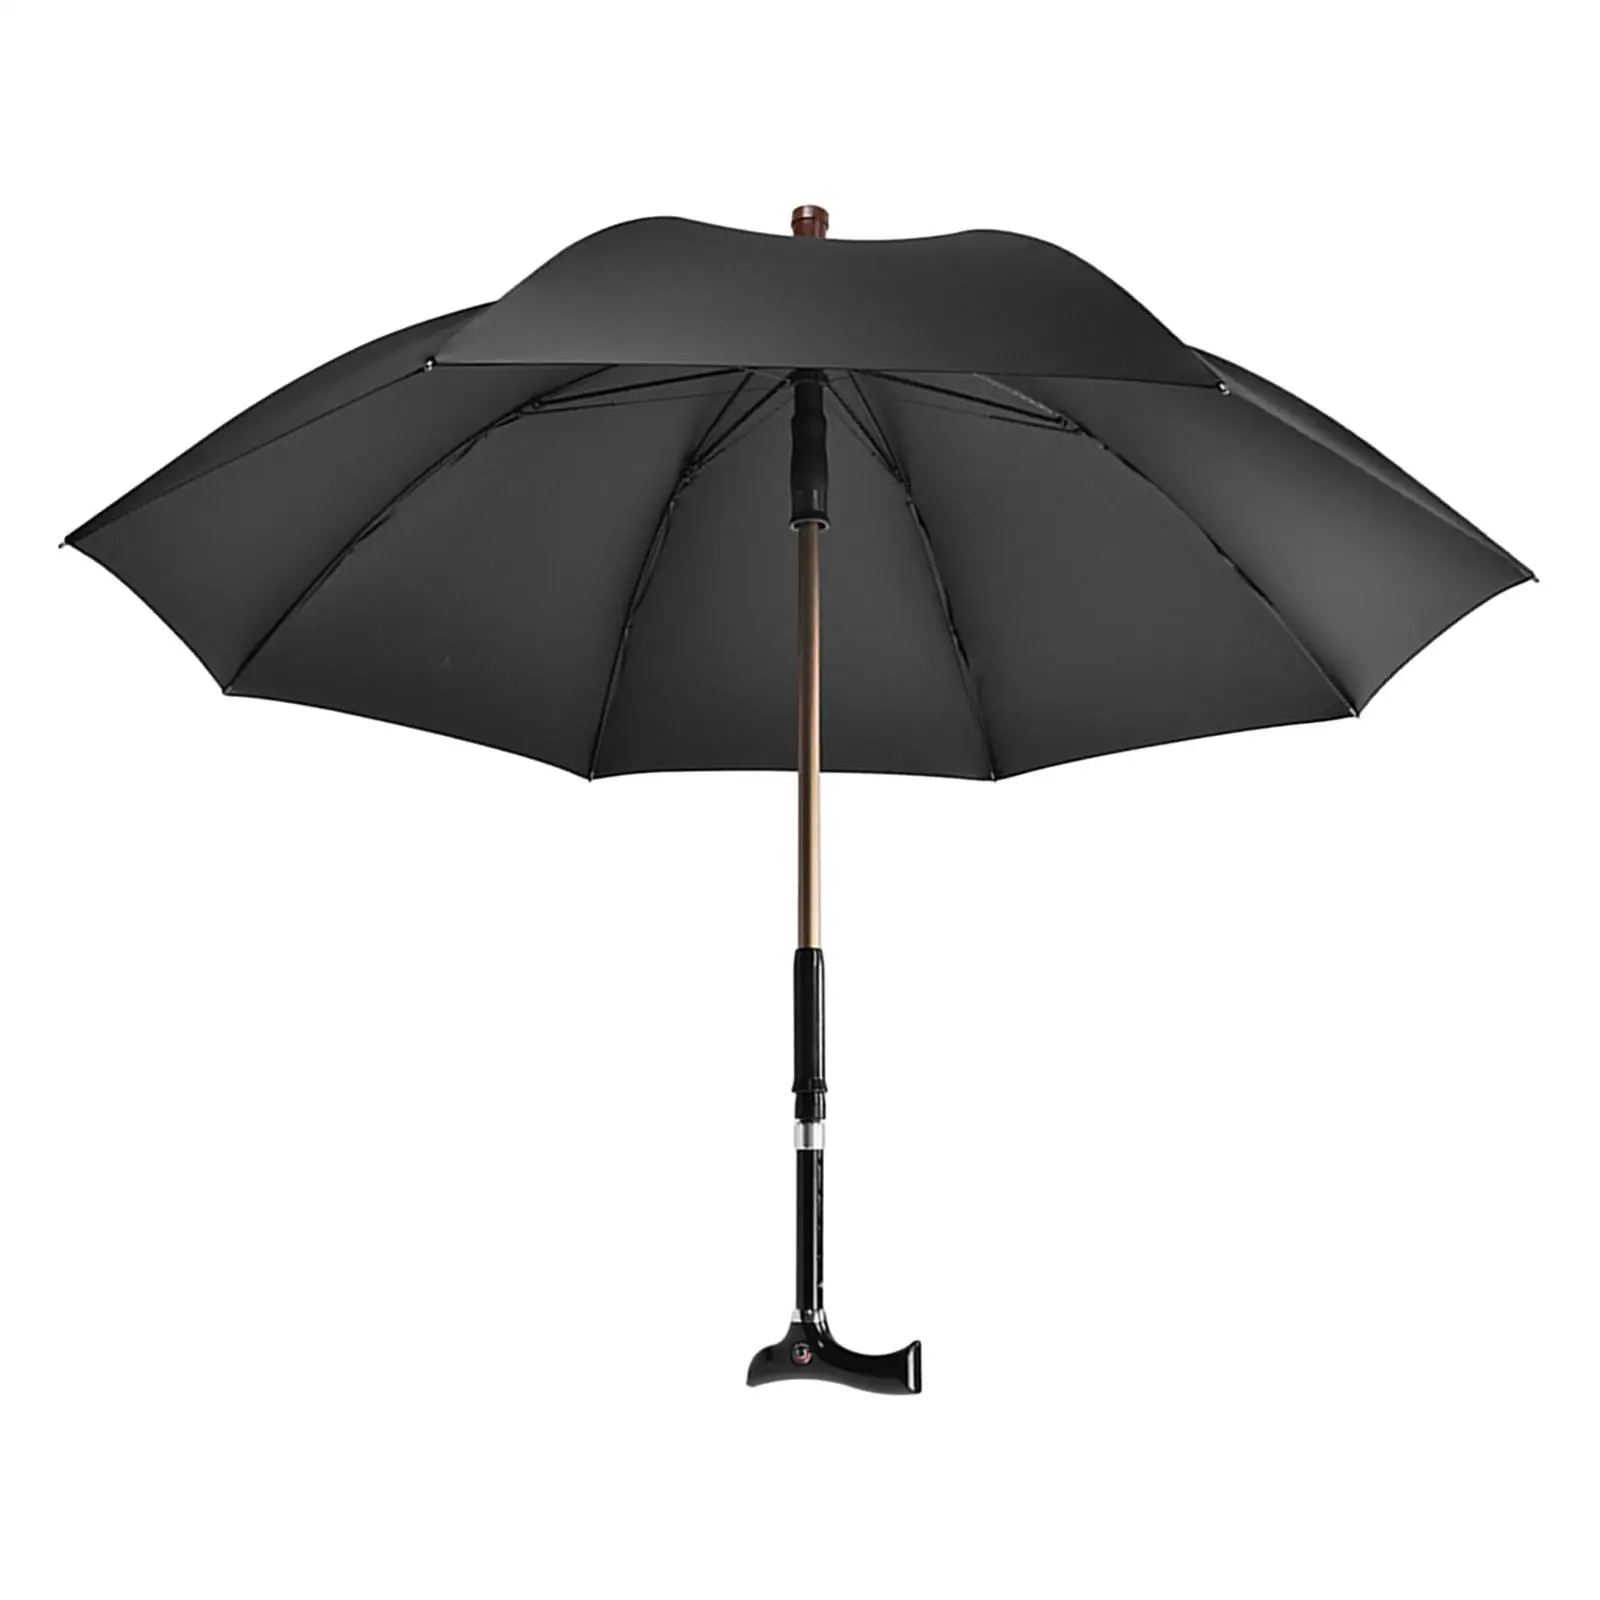 Sun Umbrella Durable 2 in 1 Design Removable Comfortable Gripping Separable Walking Cane Umbrella for Men Women Summer Travel